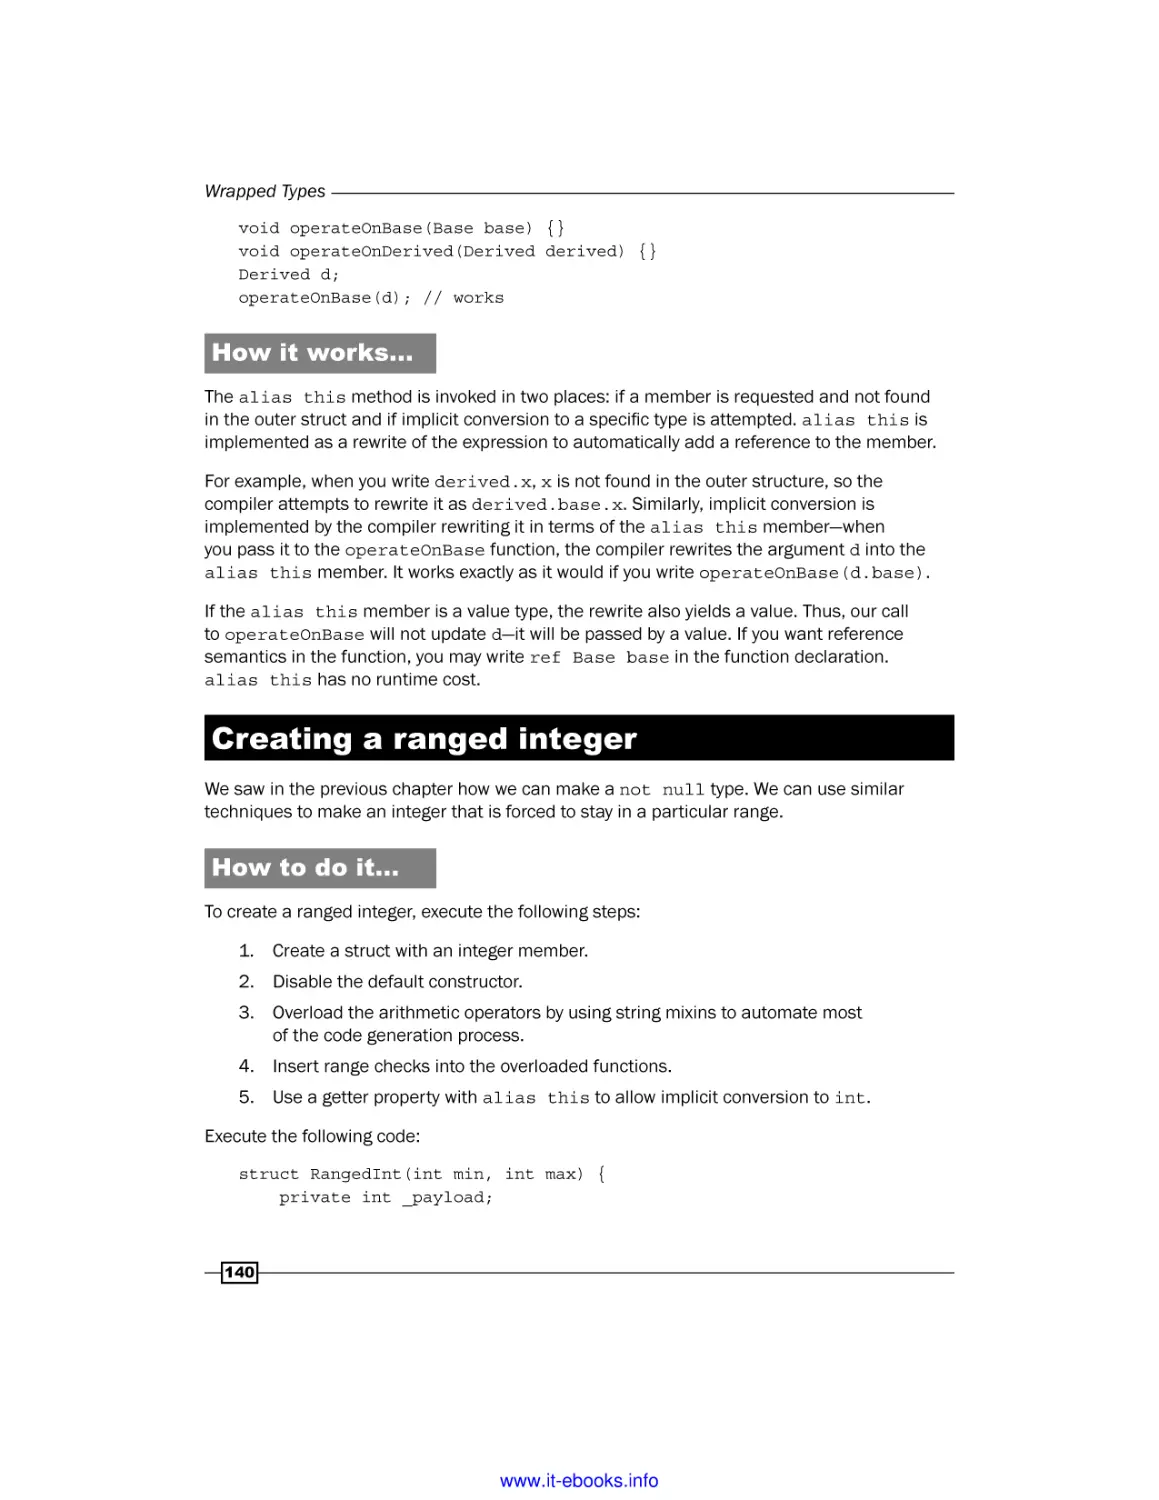 Creating a ranged integer